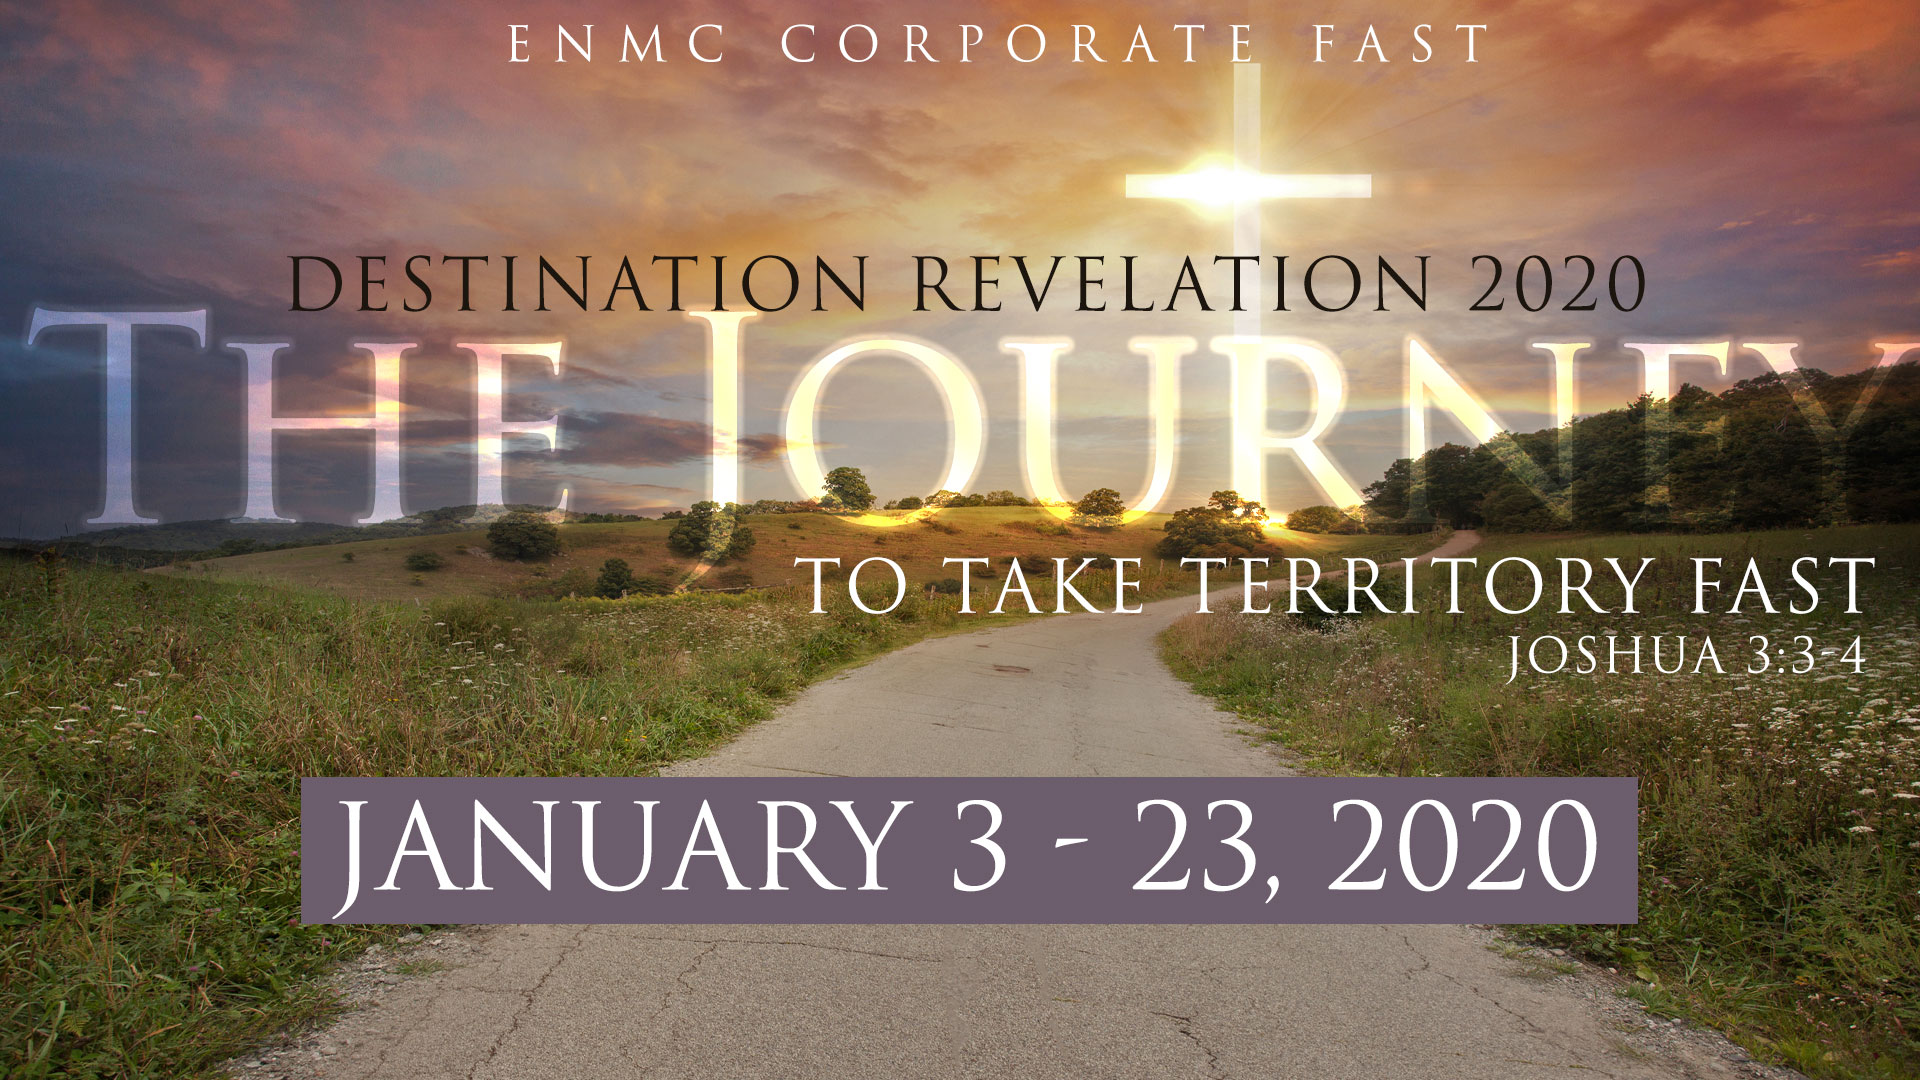 Destination Revelation 2020 - Corporate Fast